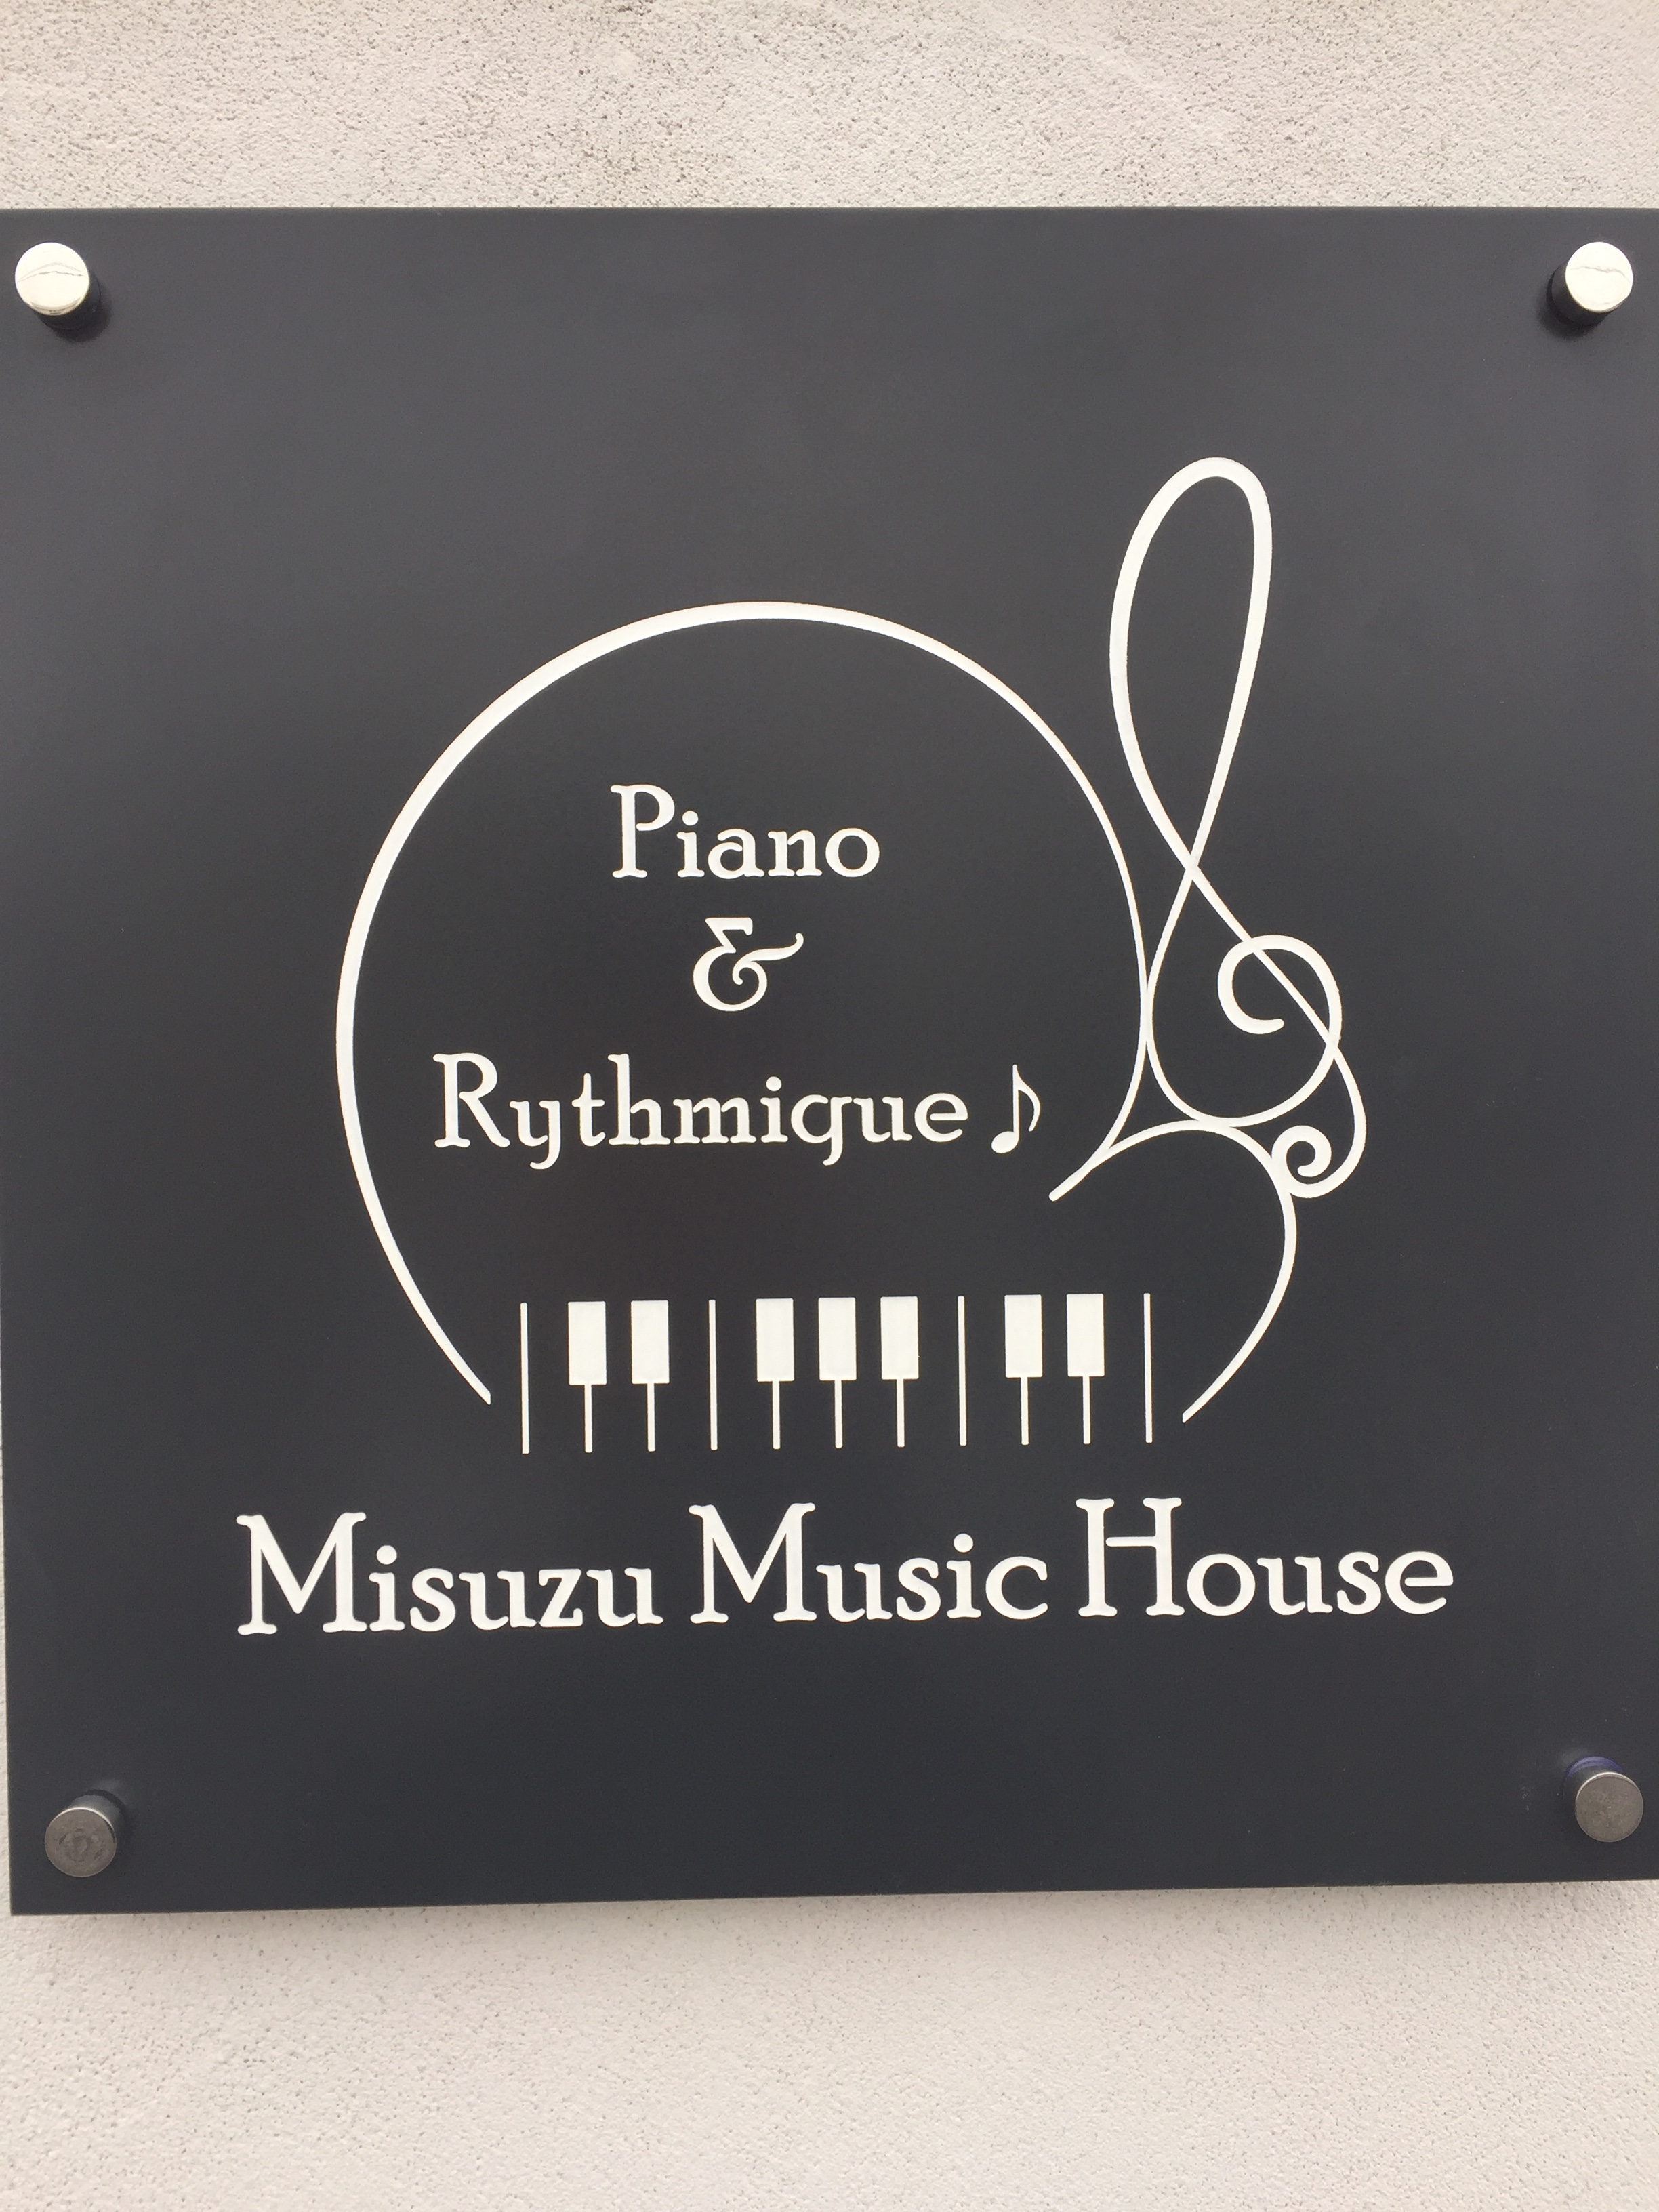 IMG_9331.JPG alt="Misuzu Music Houseの看板が出来上がりました"